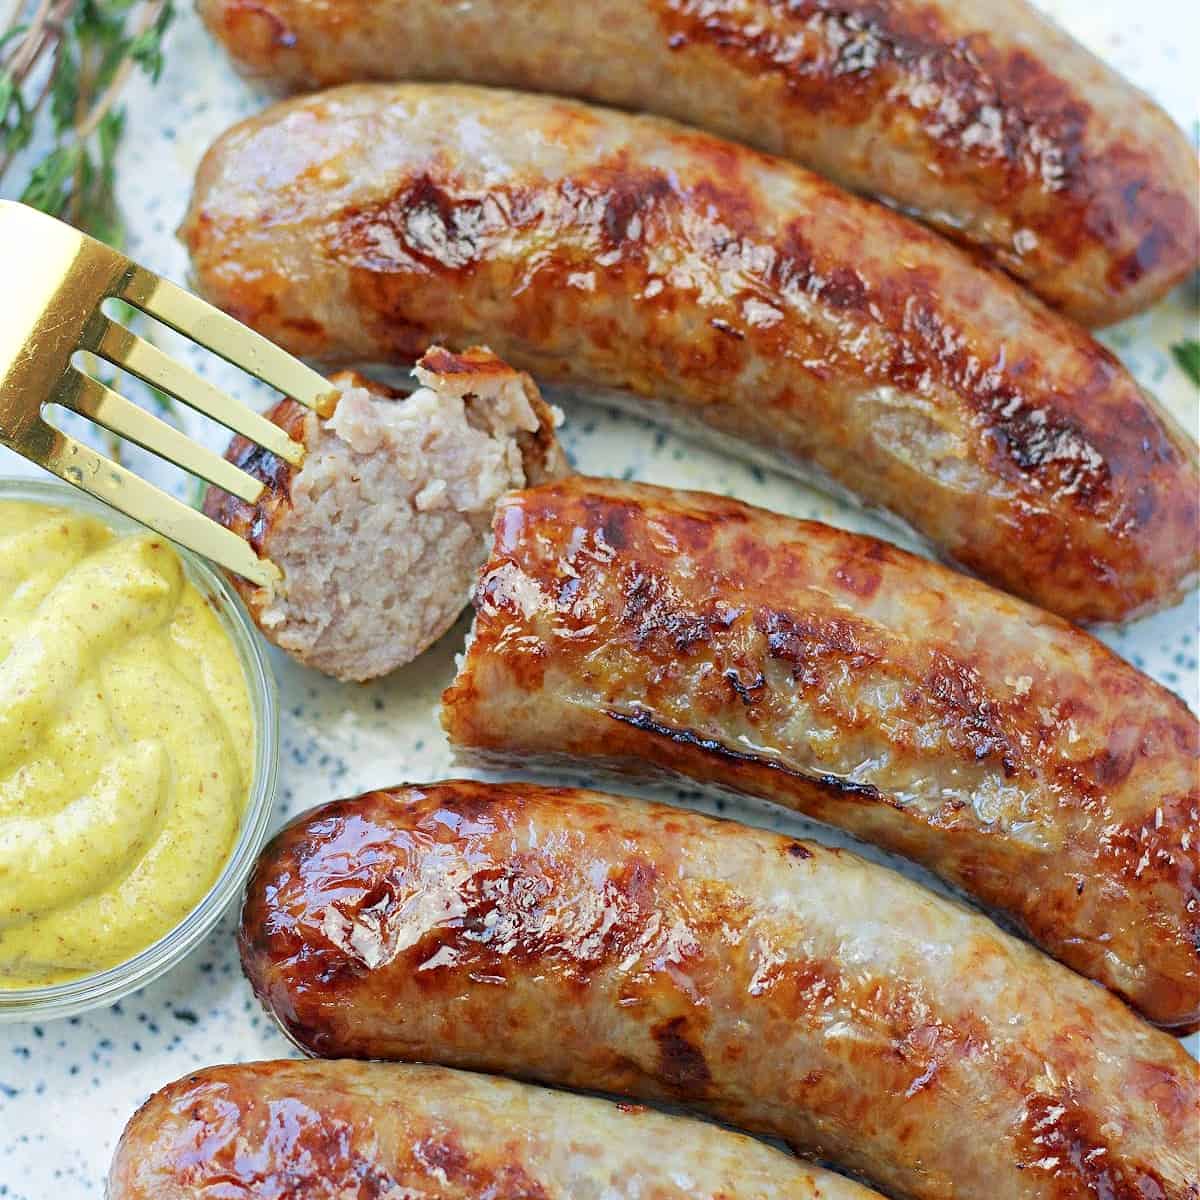 brats sausage on a plate